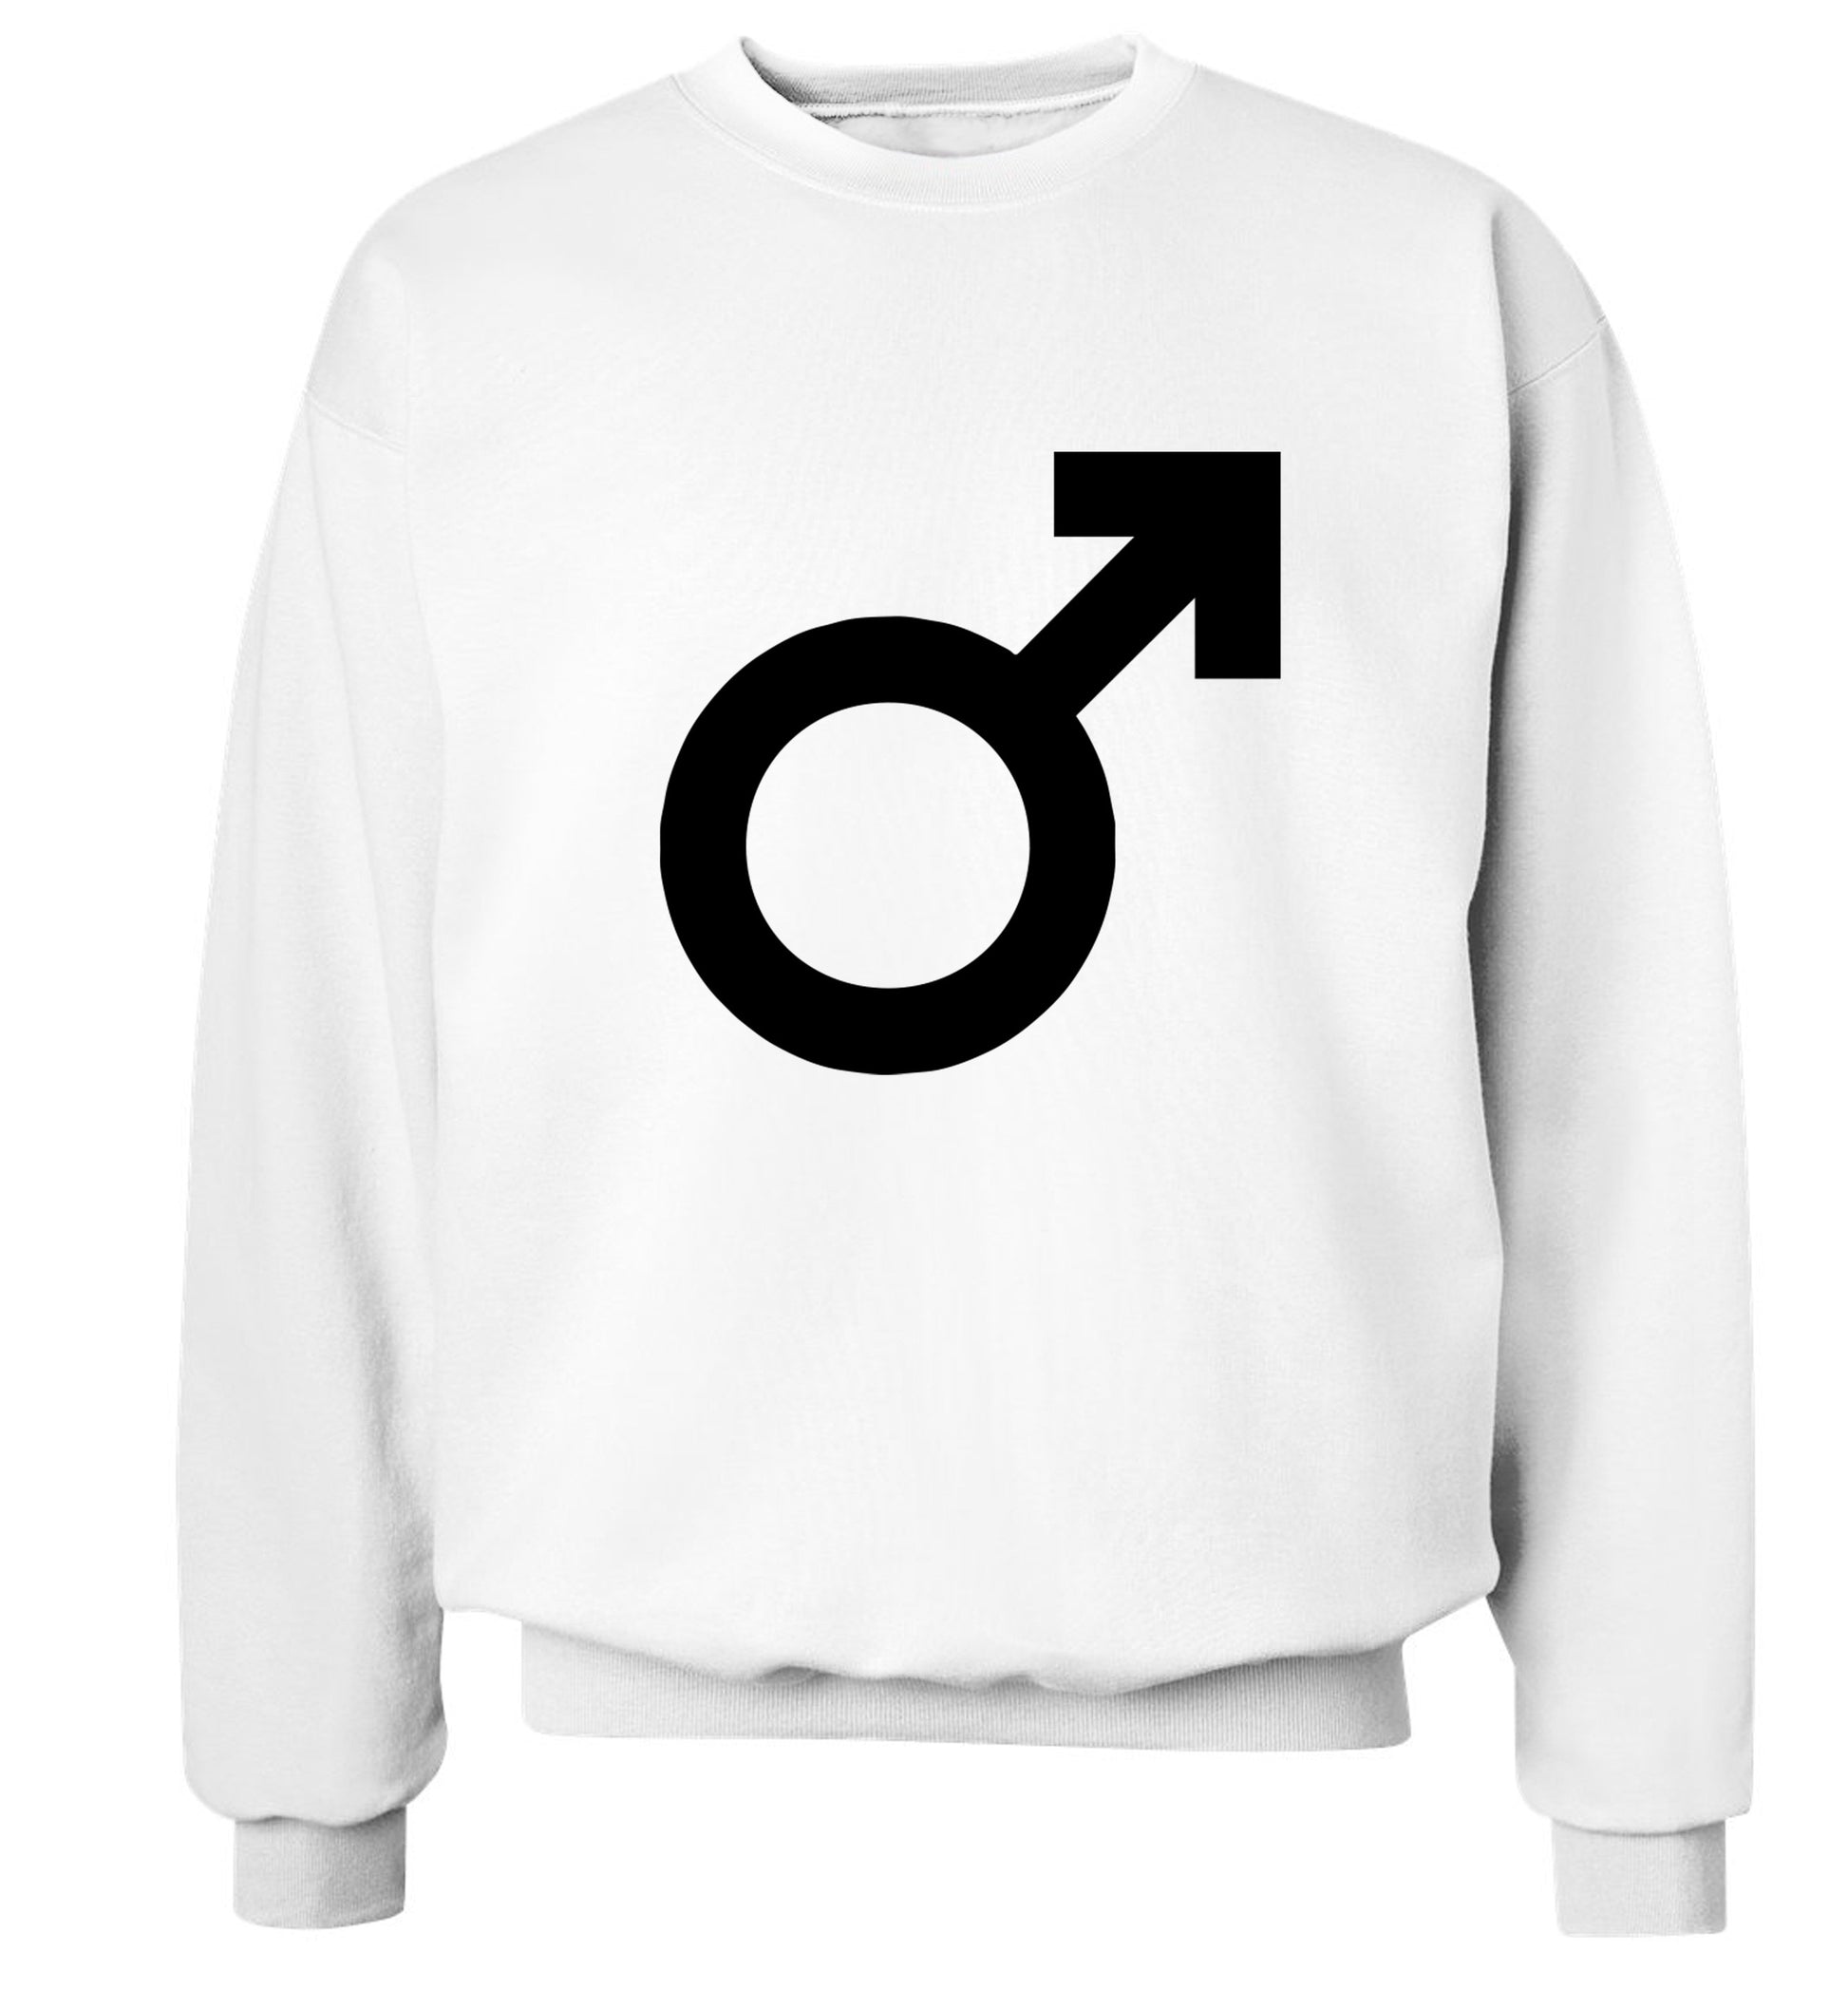 Male symbol large Adult's unisex white Sweater 2XL